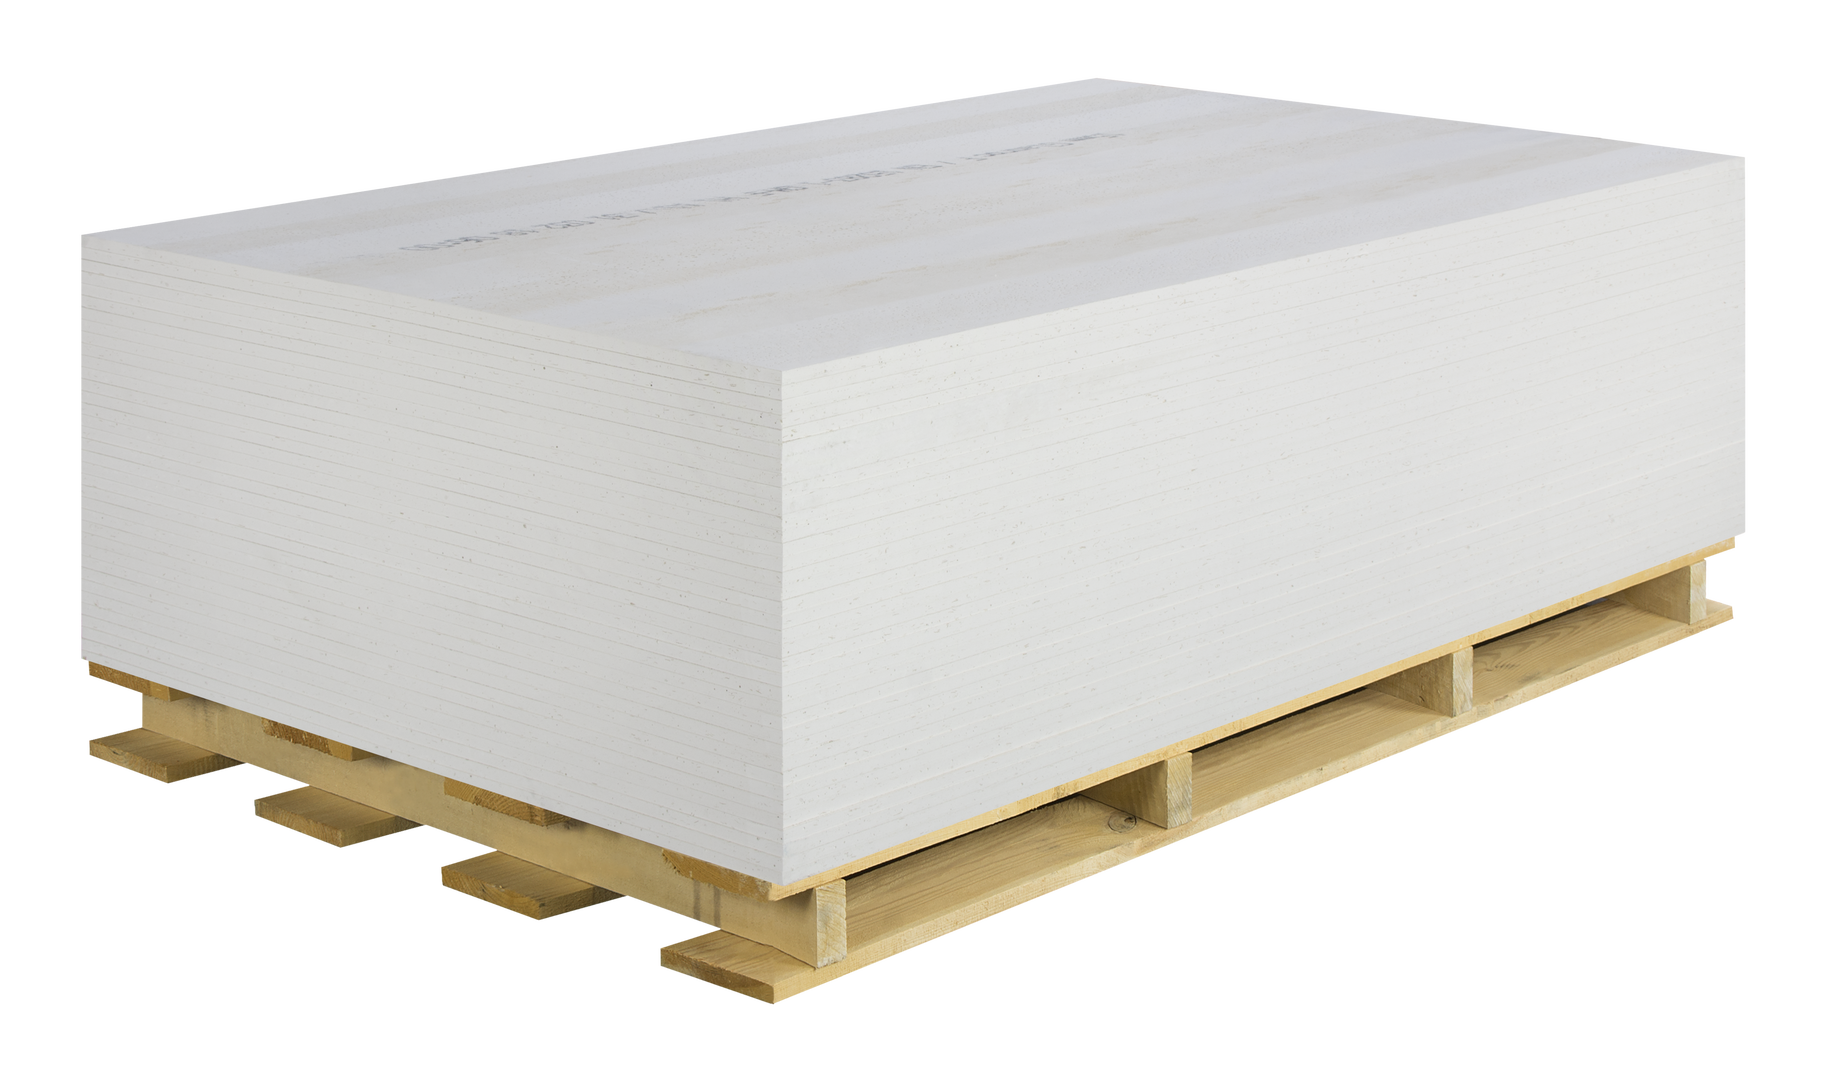 Special gypsum boards - Rigid Plate Glasroc F Wrinkle 20 x 1200 x 2000 mm, https:maxbau.ro